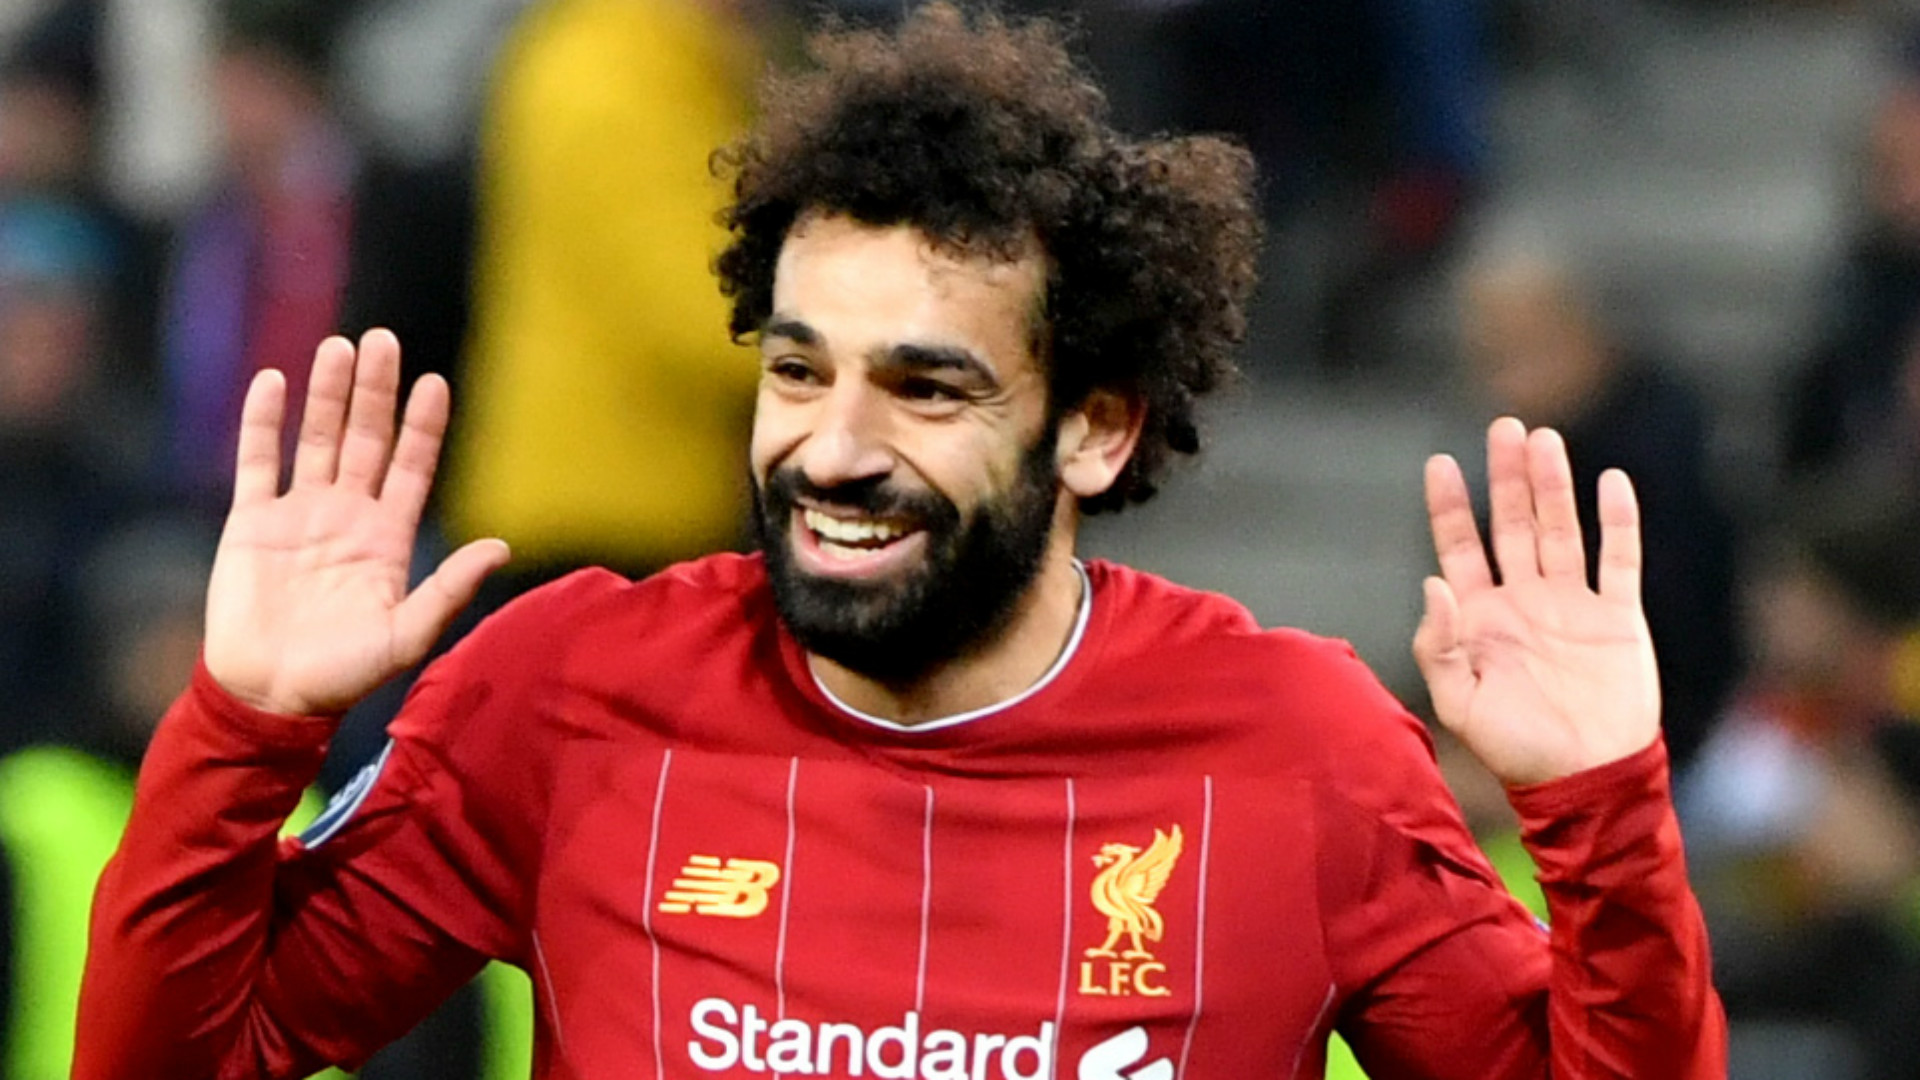 Liverpool Salah / Mohamed Salah Man Arrested Over Racist Tweet Aimed At